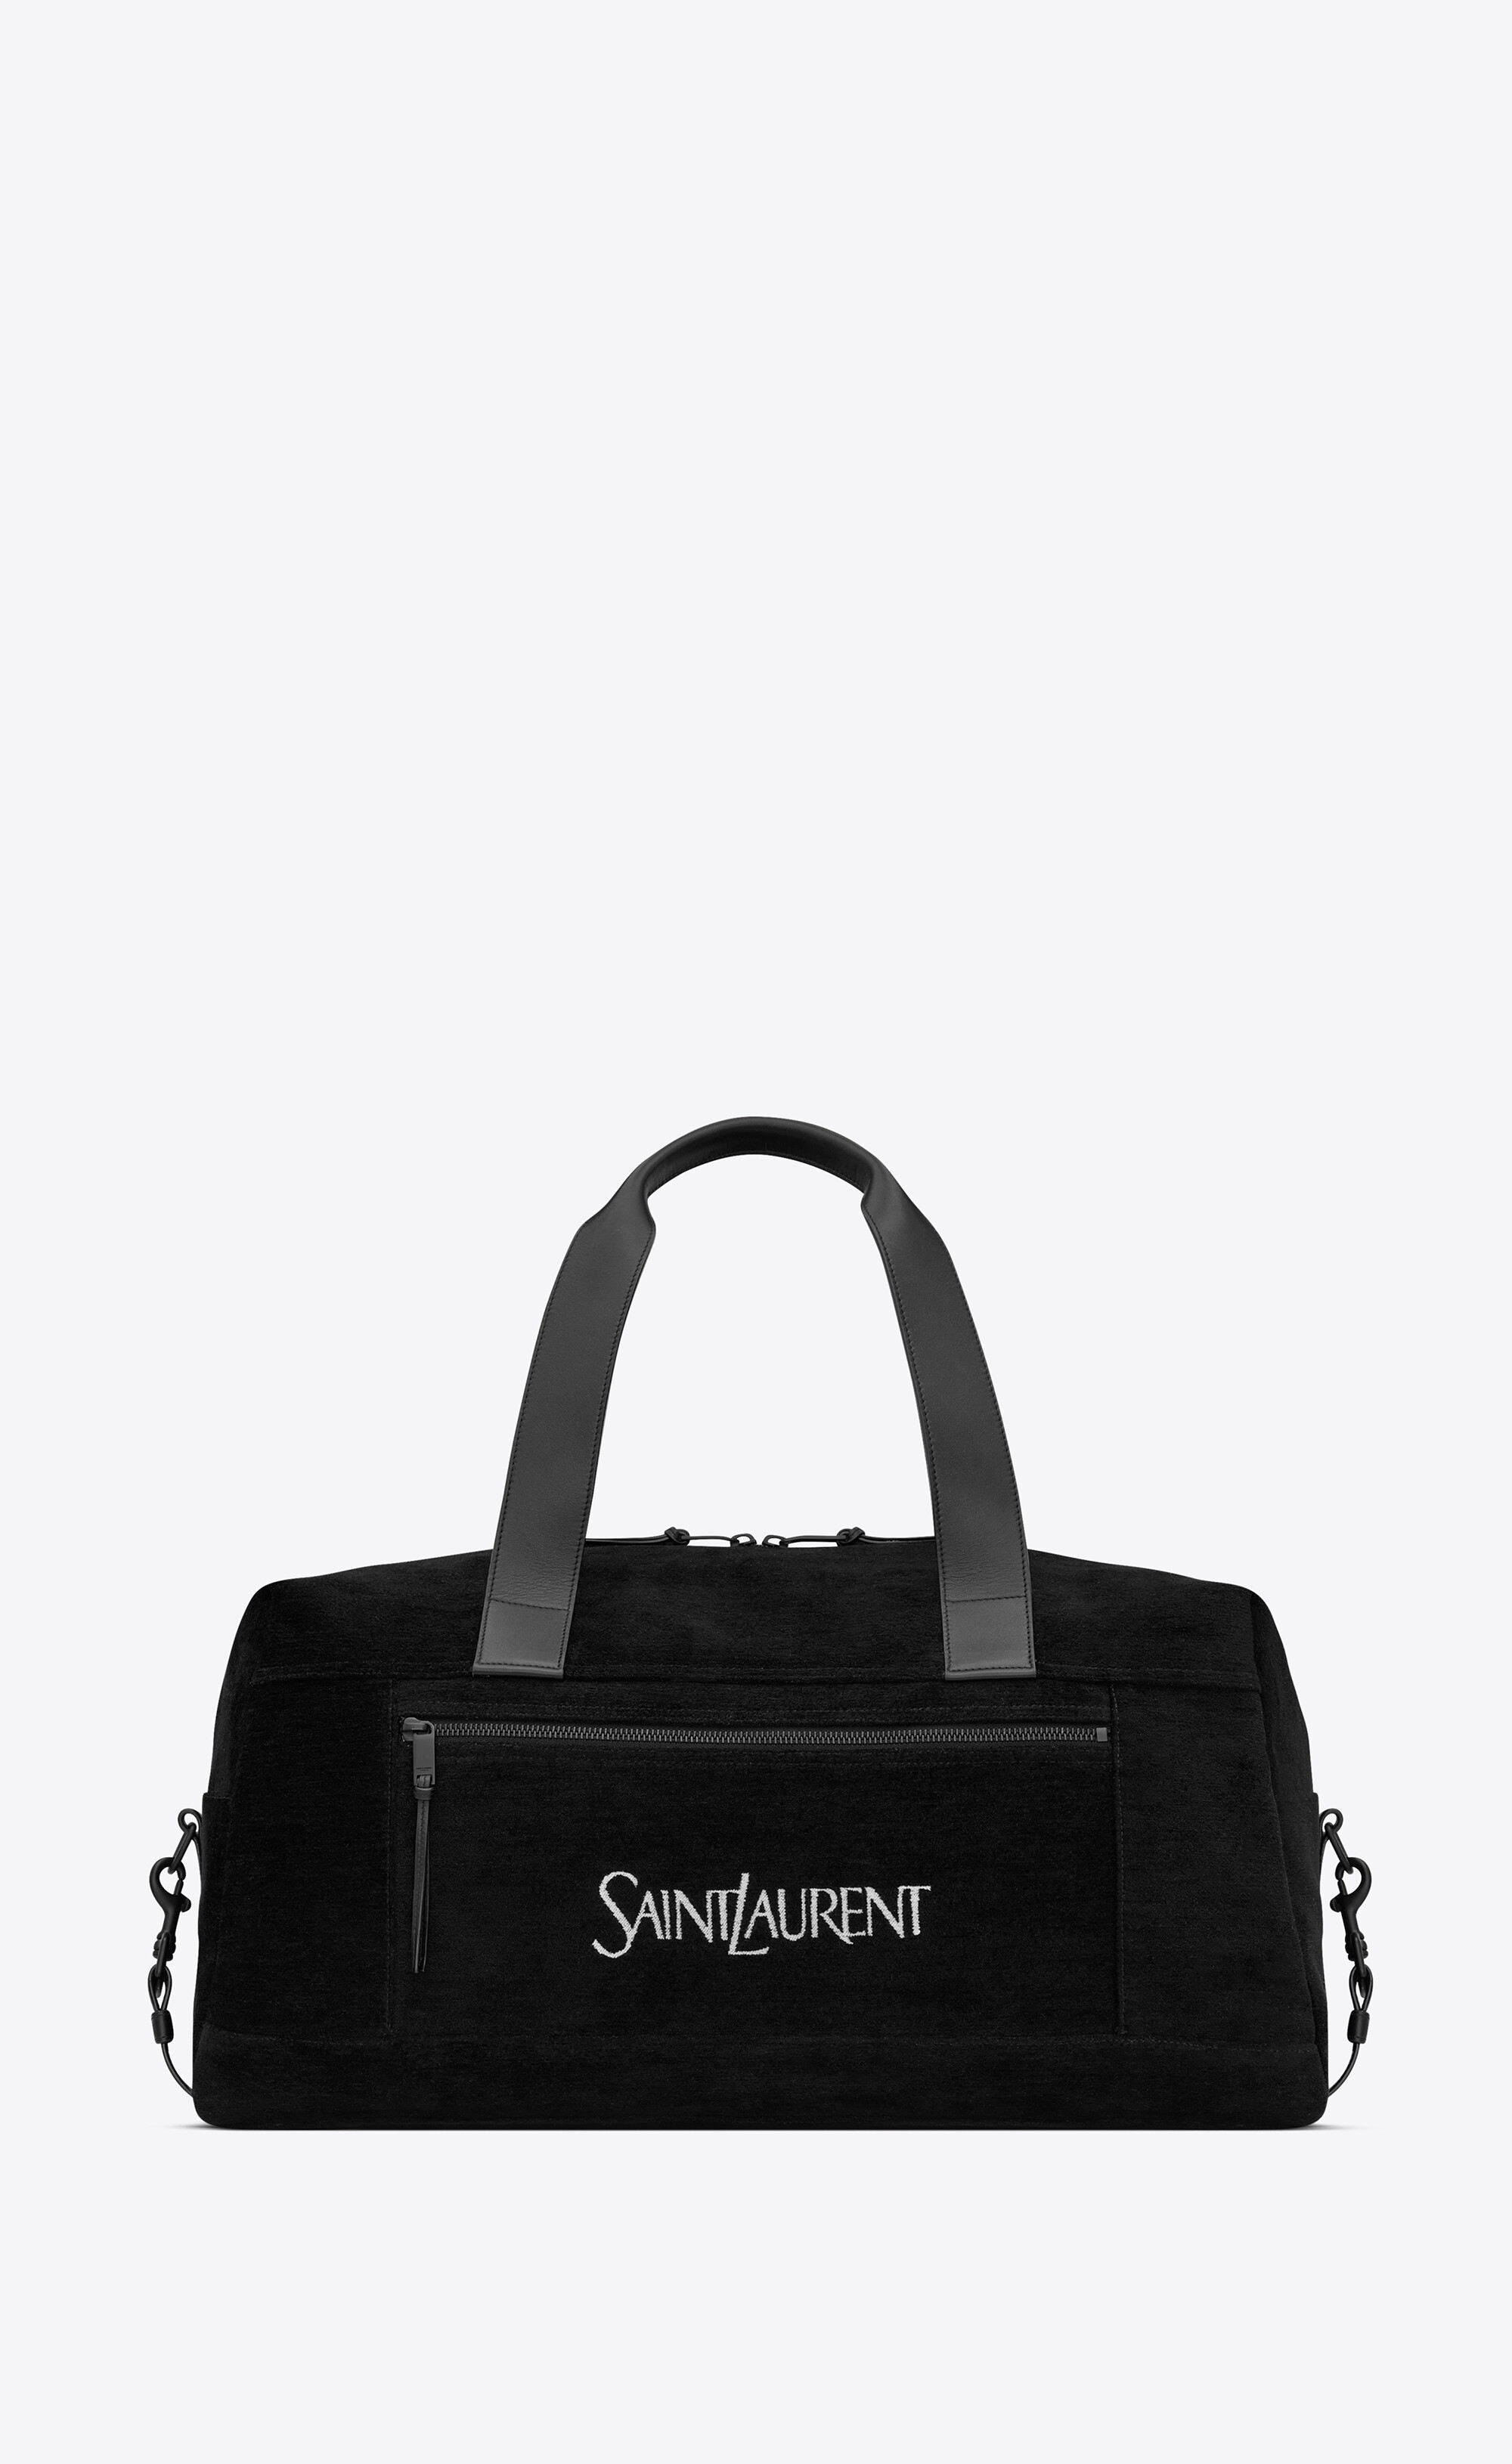 Jacquard SAINT LAURENT duffle bag | Saint Laurent | YSL.com